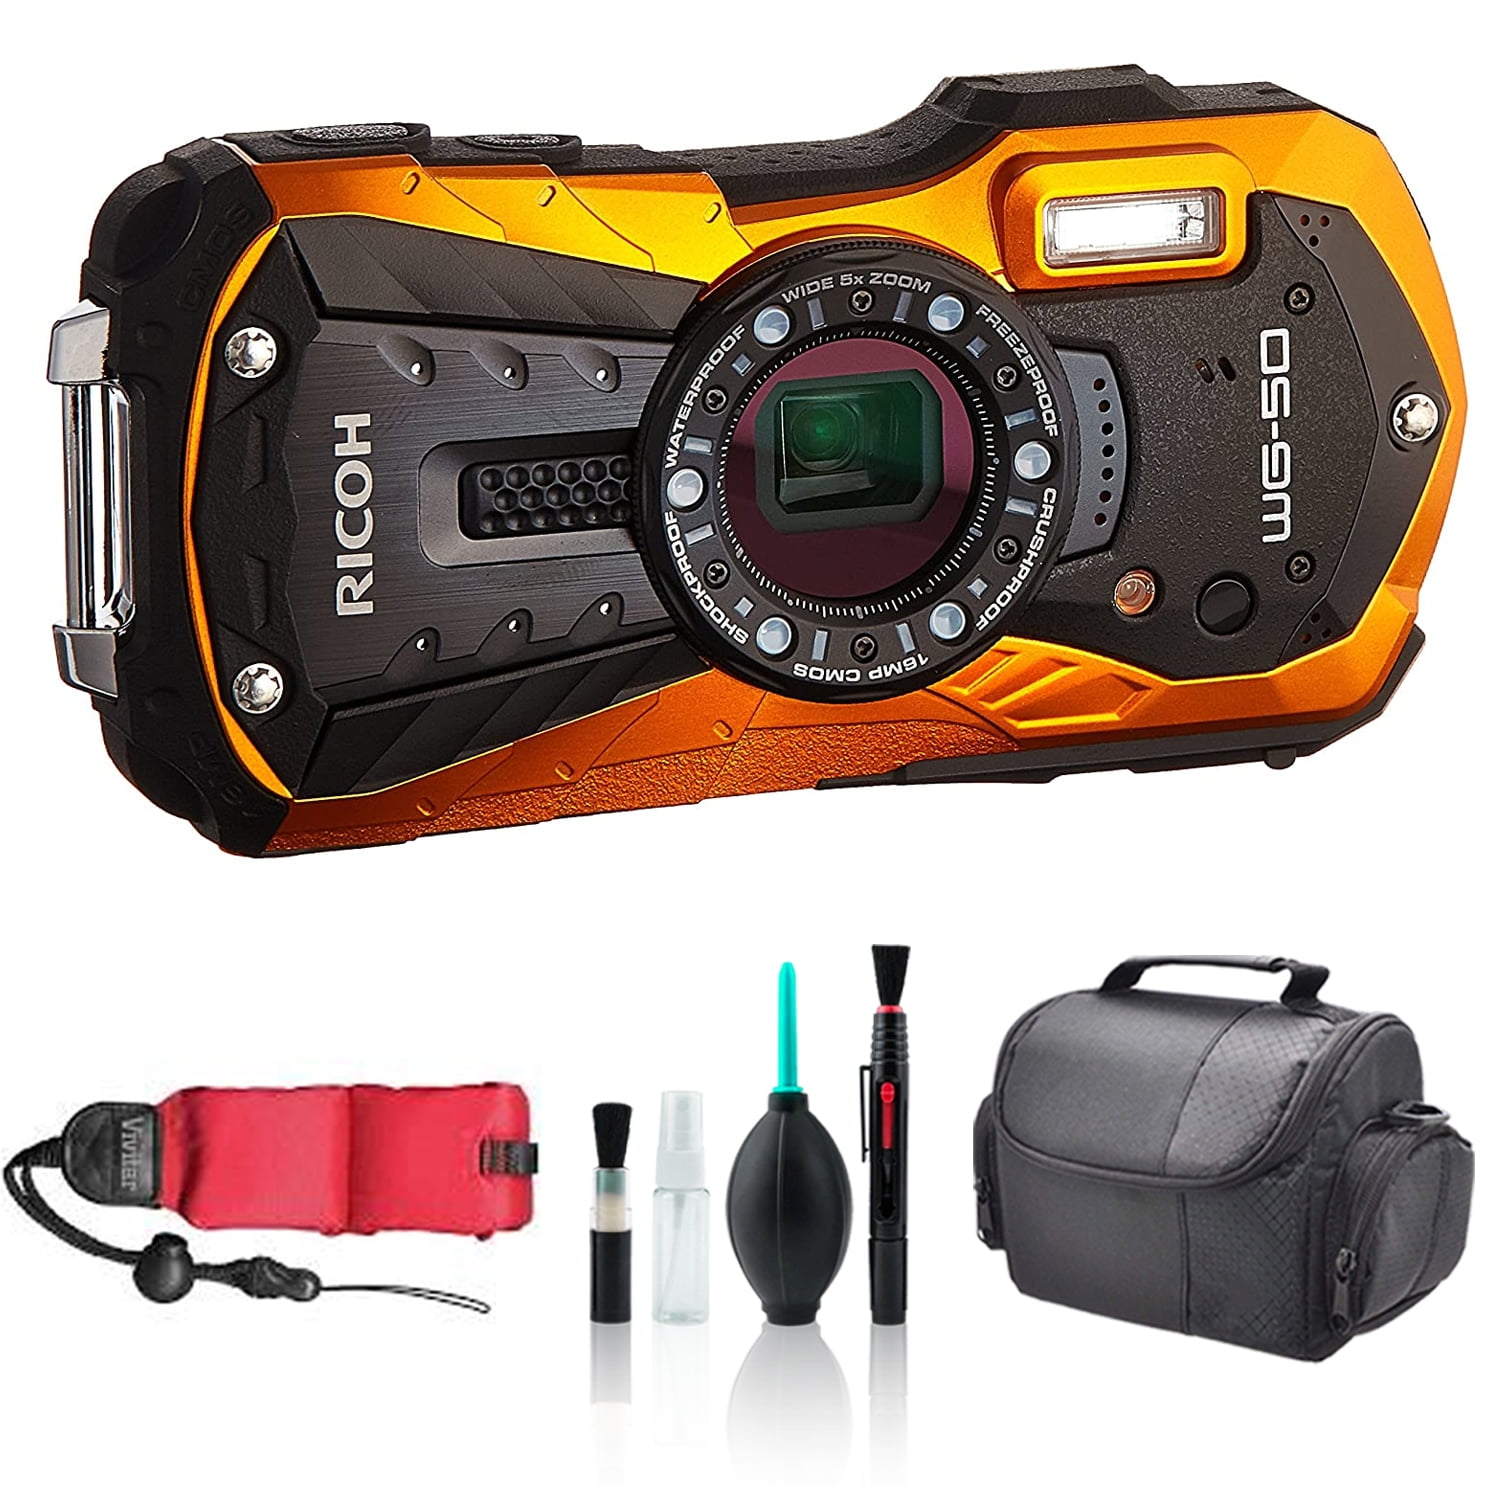 Ricoh WG-50 Waterproof Digital Camera (Orange) - with Carrying Case + More  - International Model - Walmart.com